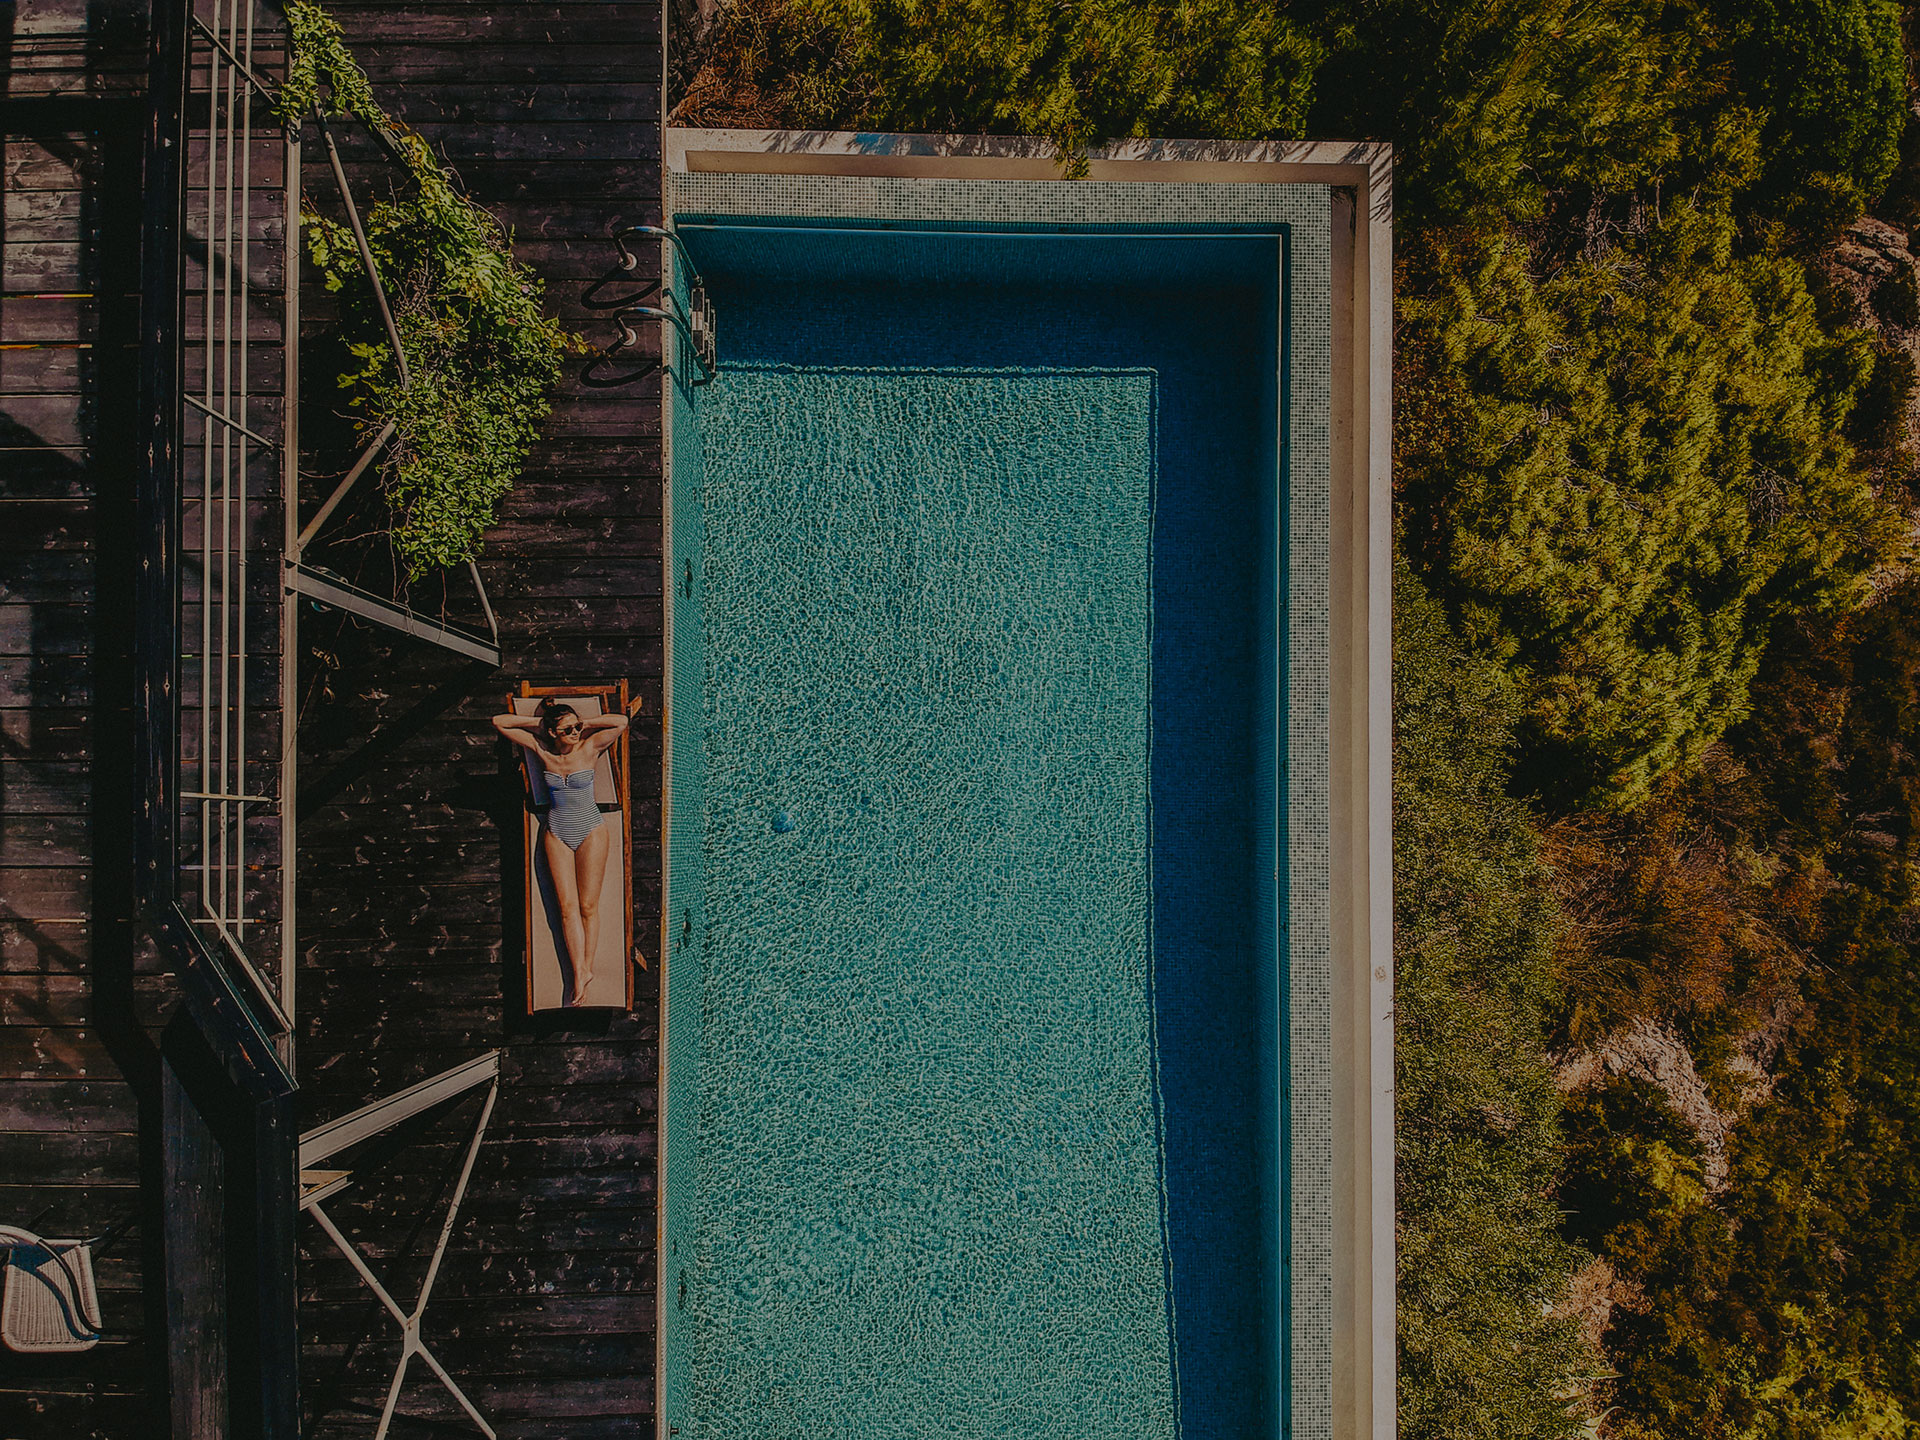 woman sun tanning next to pool